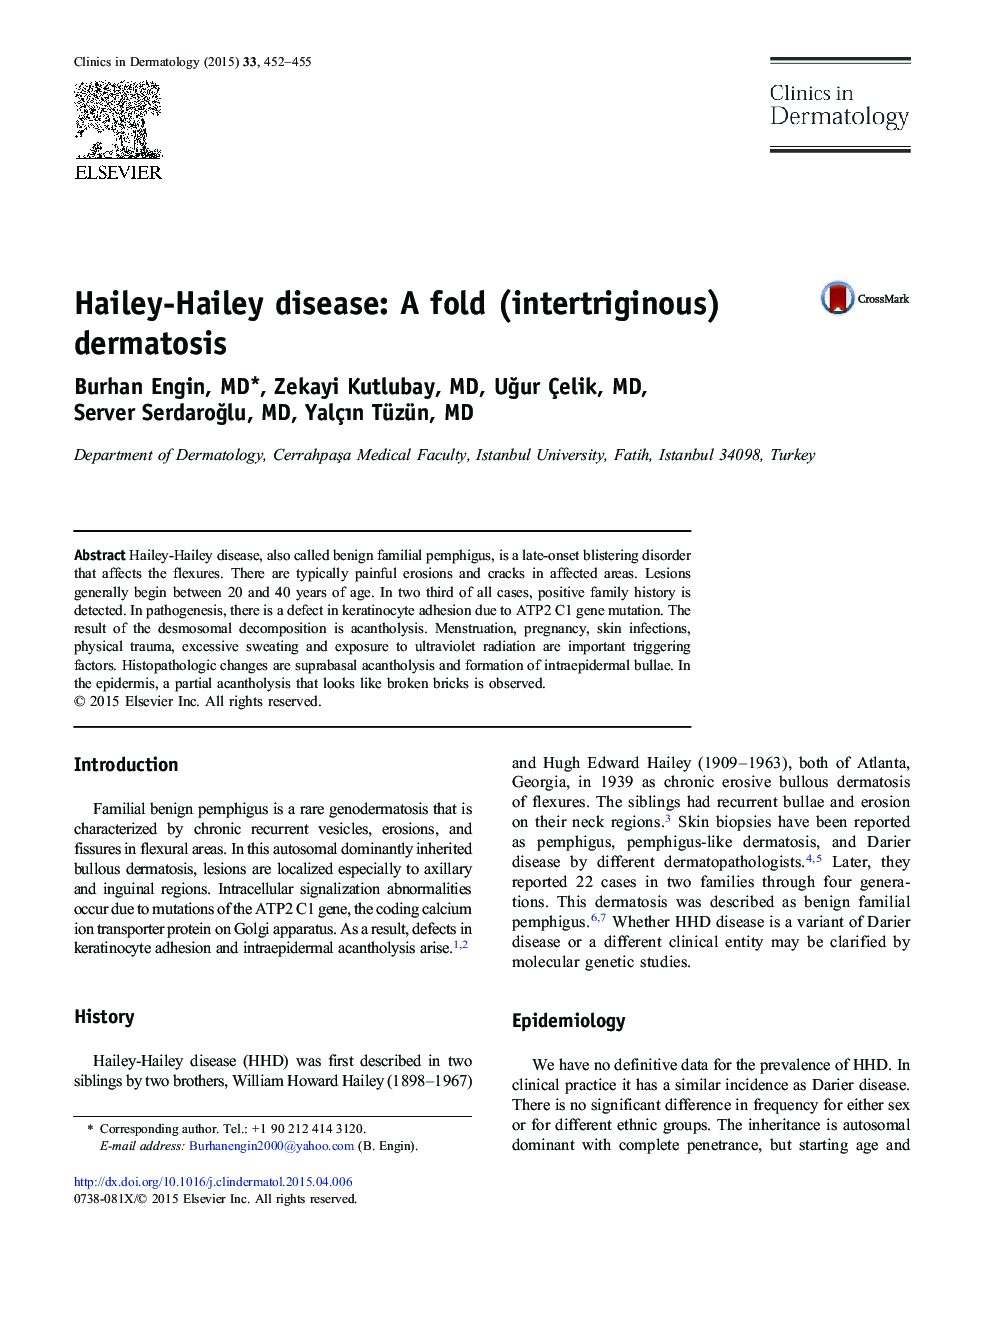 Hailey-Hailey disease: A fold (intertriginous) dermatosis